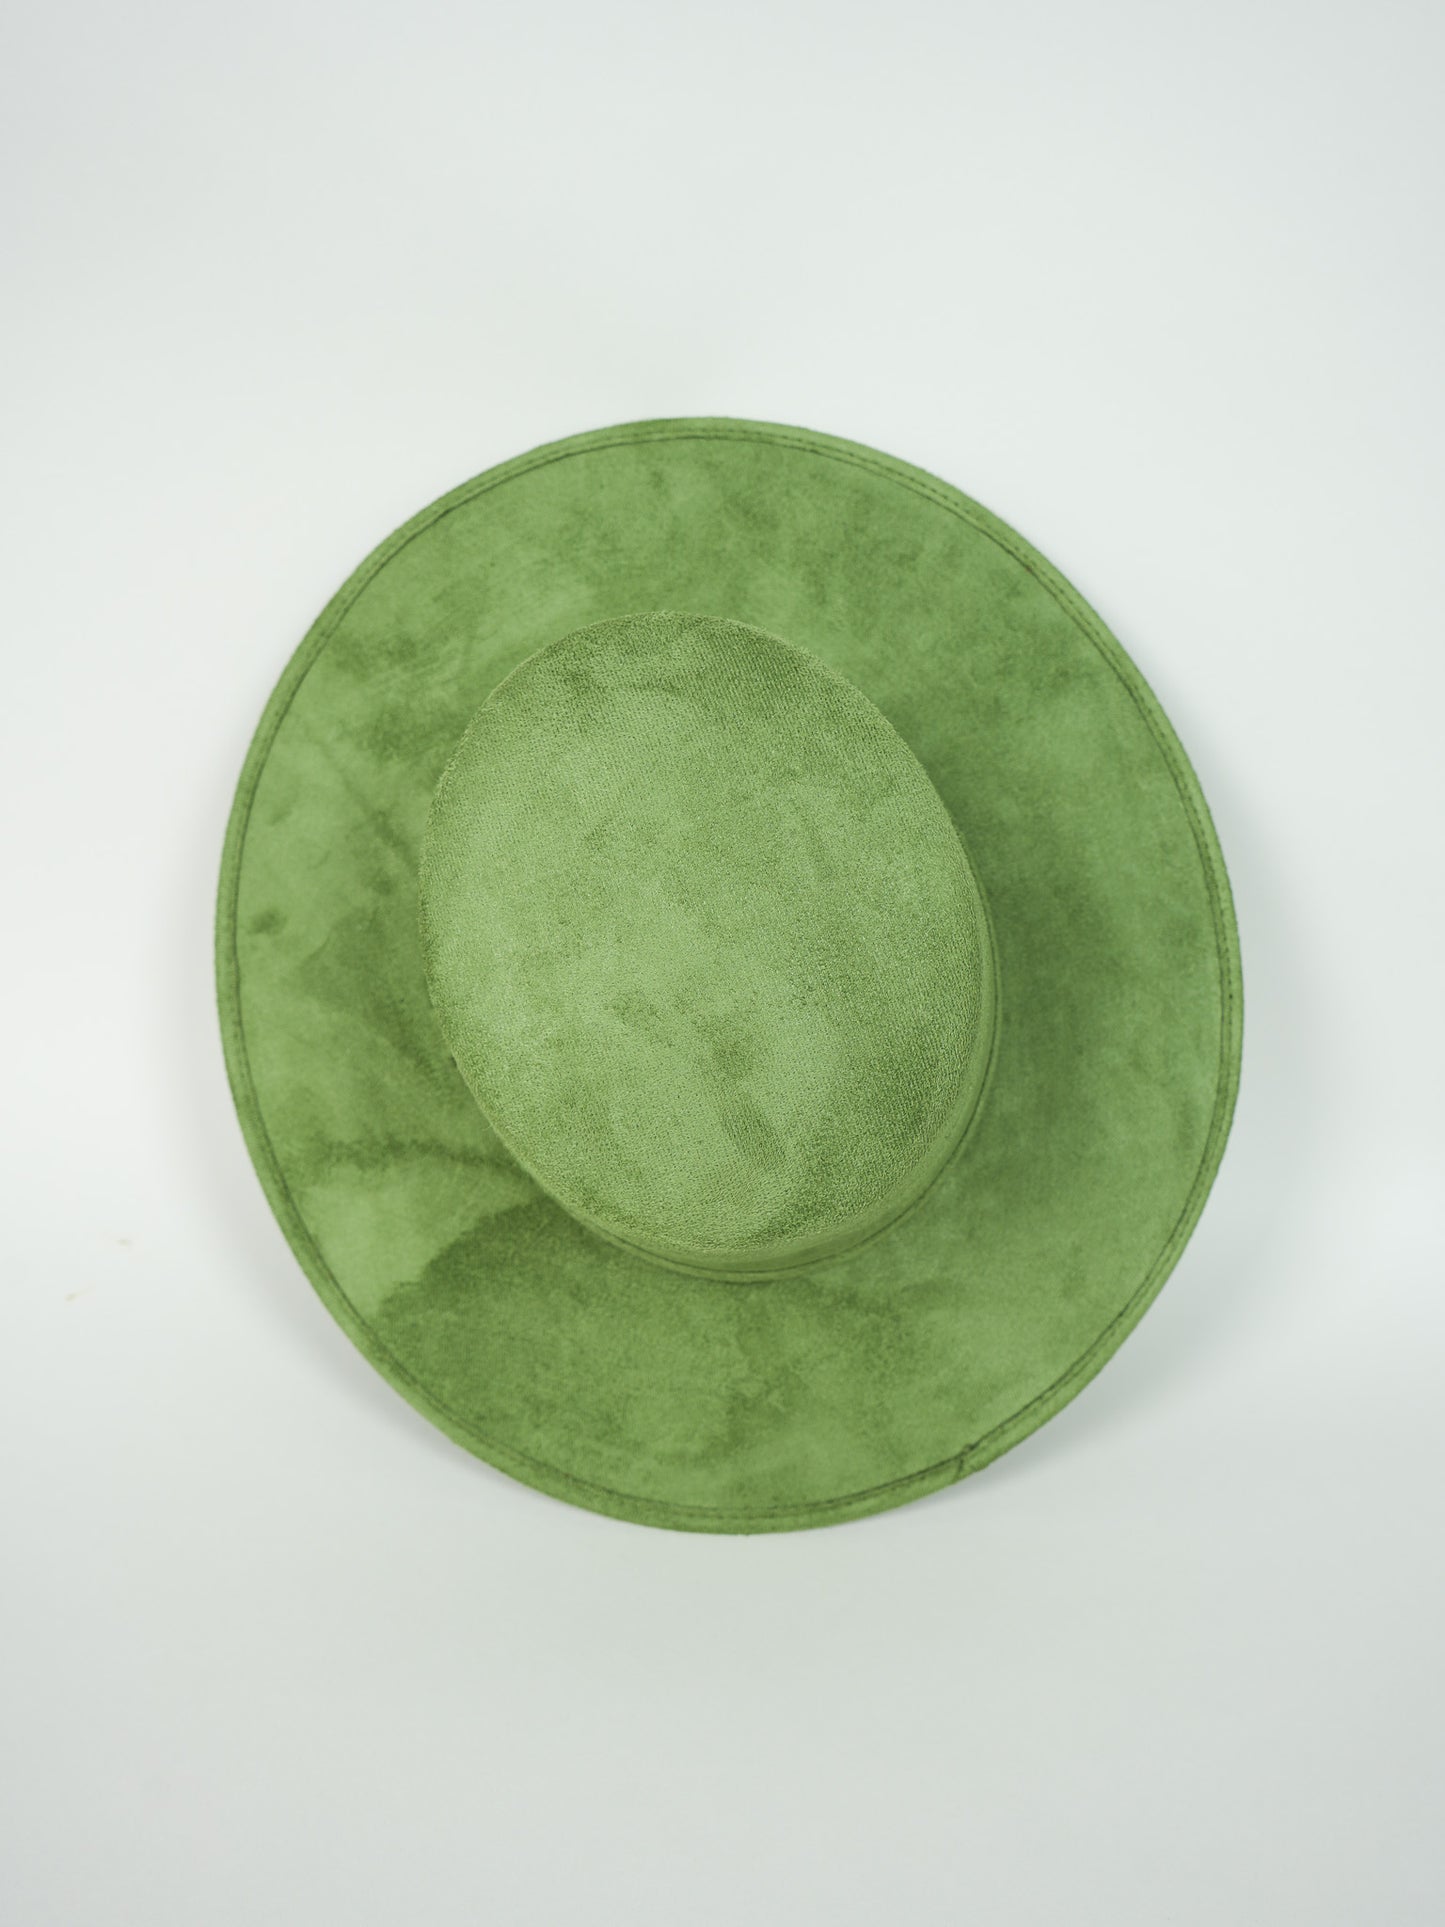 Gigi Flat Top Hat - Avocado Green